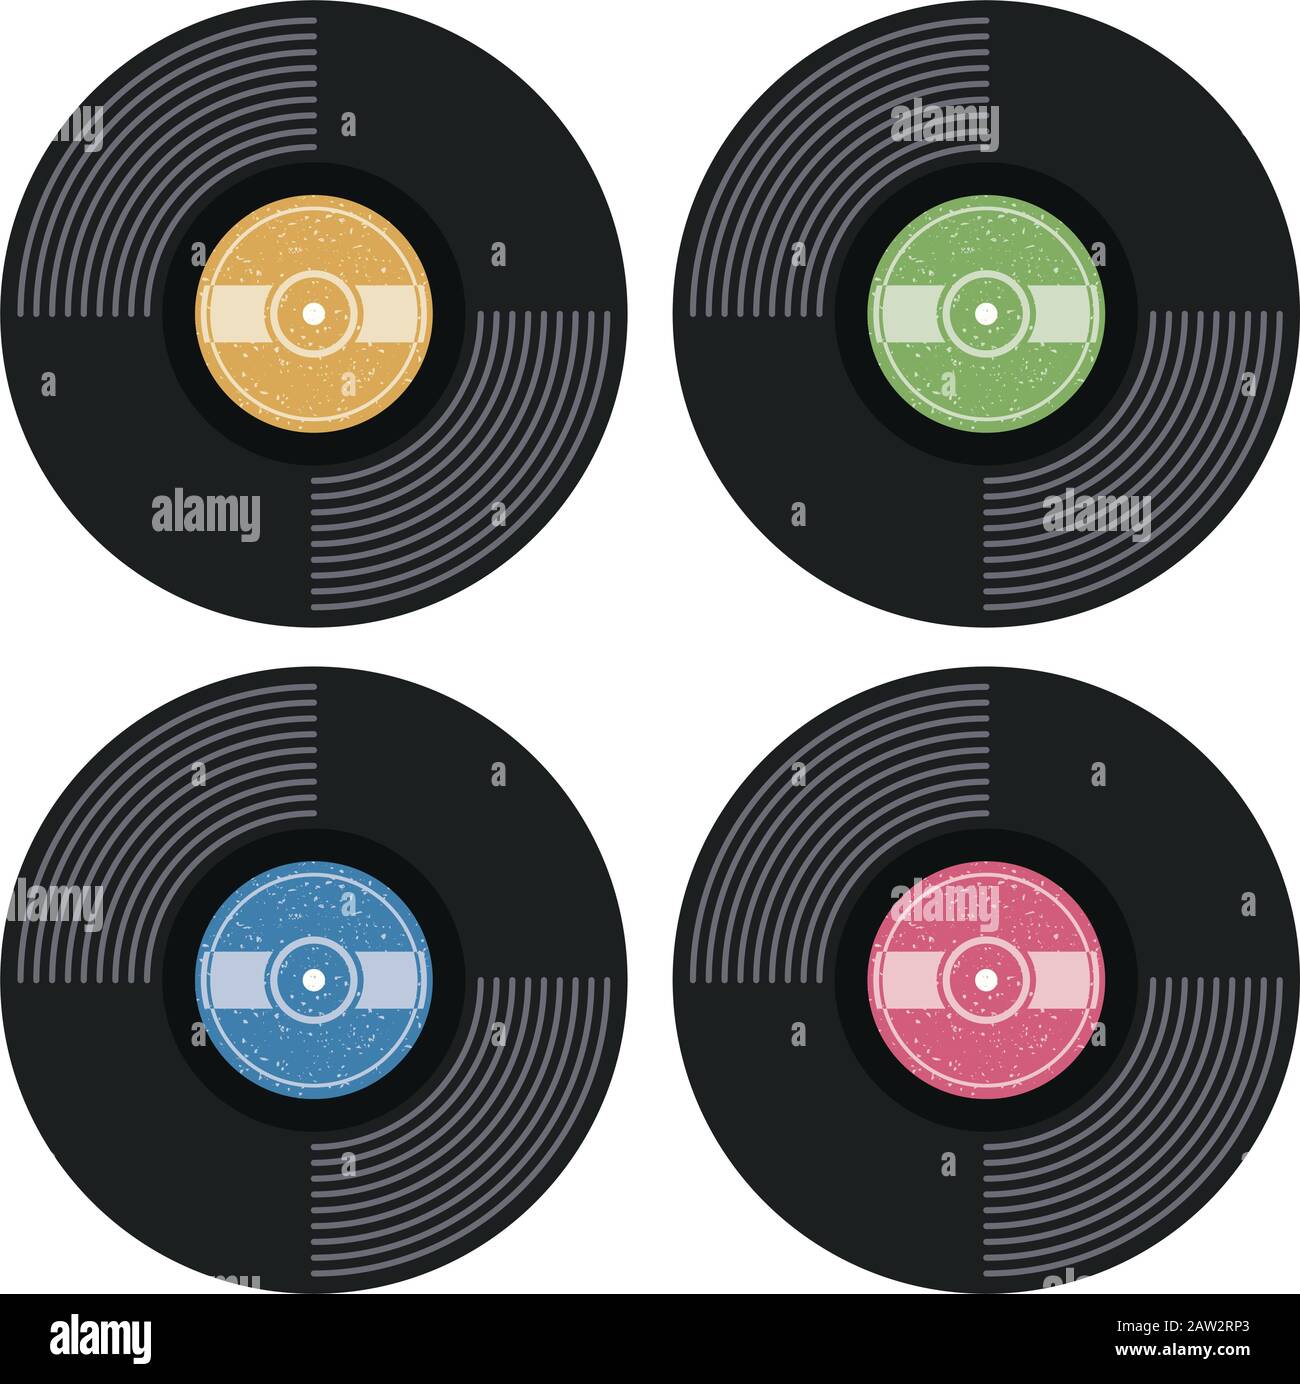 Spotlight Dance Hits - Vinil Records - Discos de Vinil